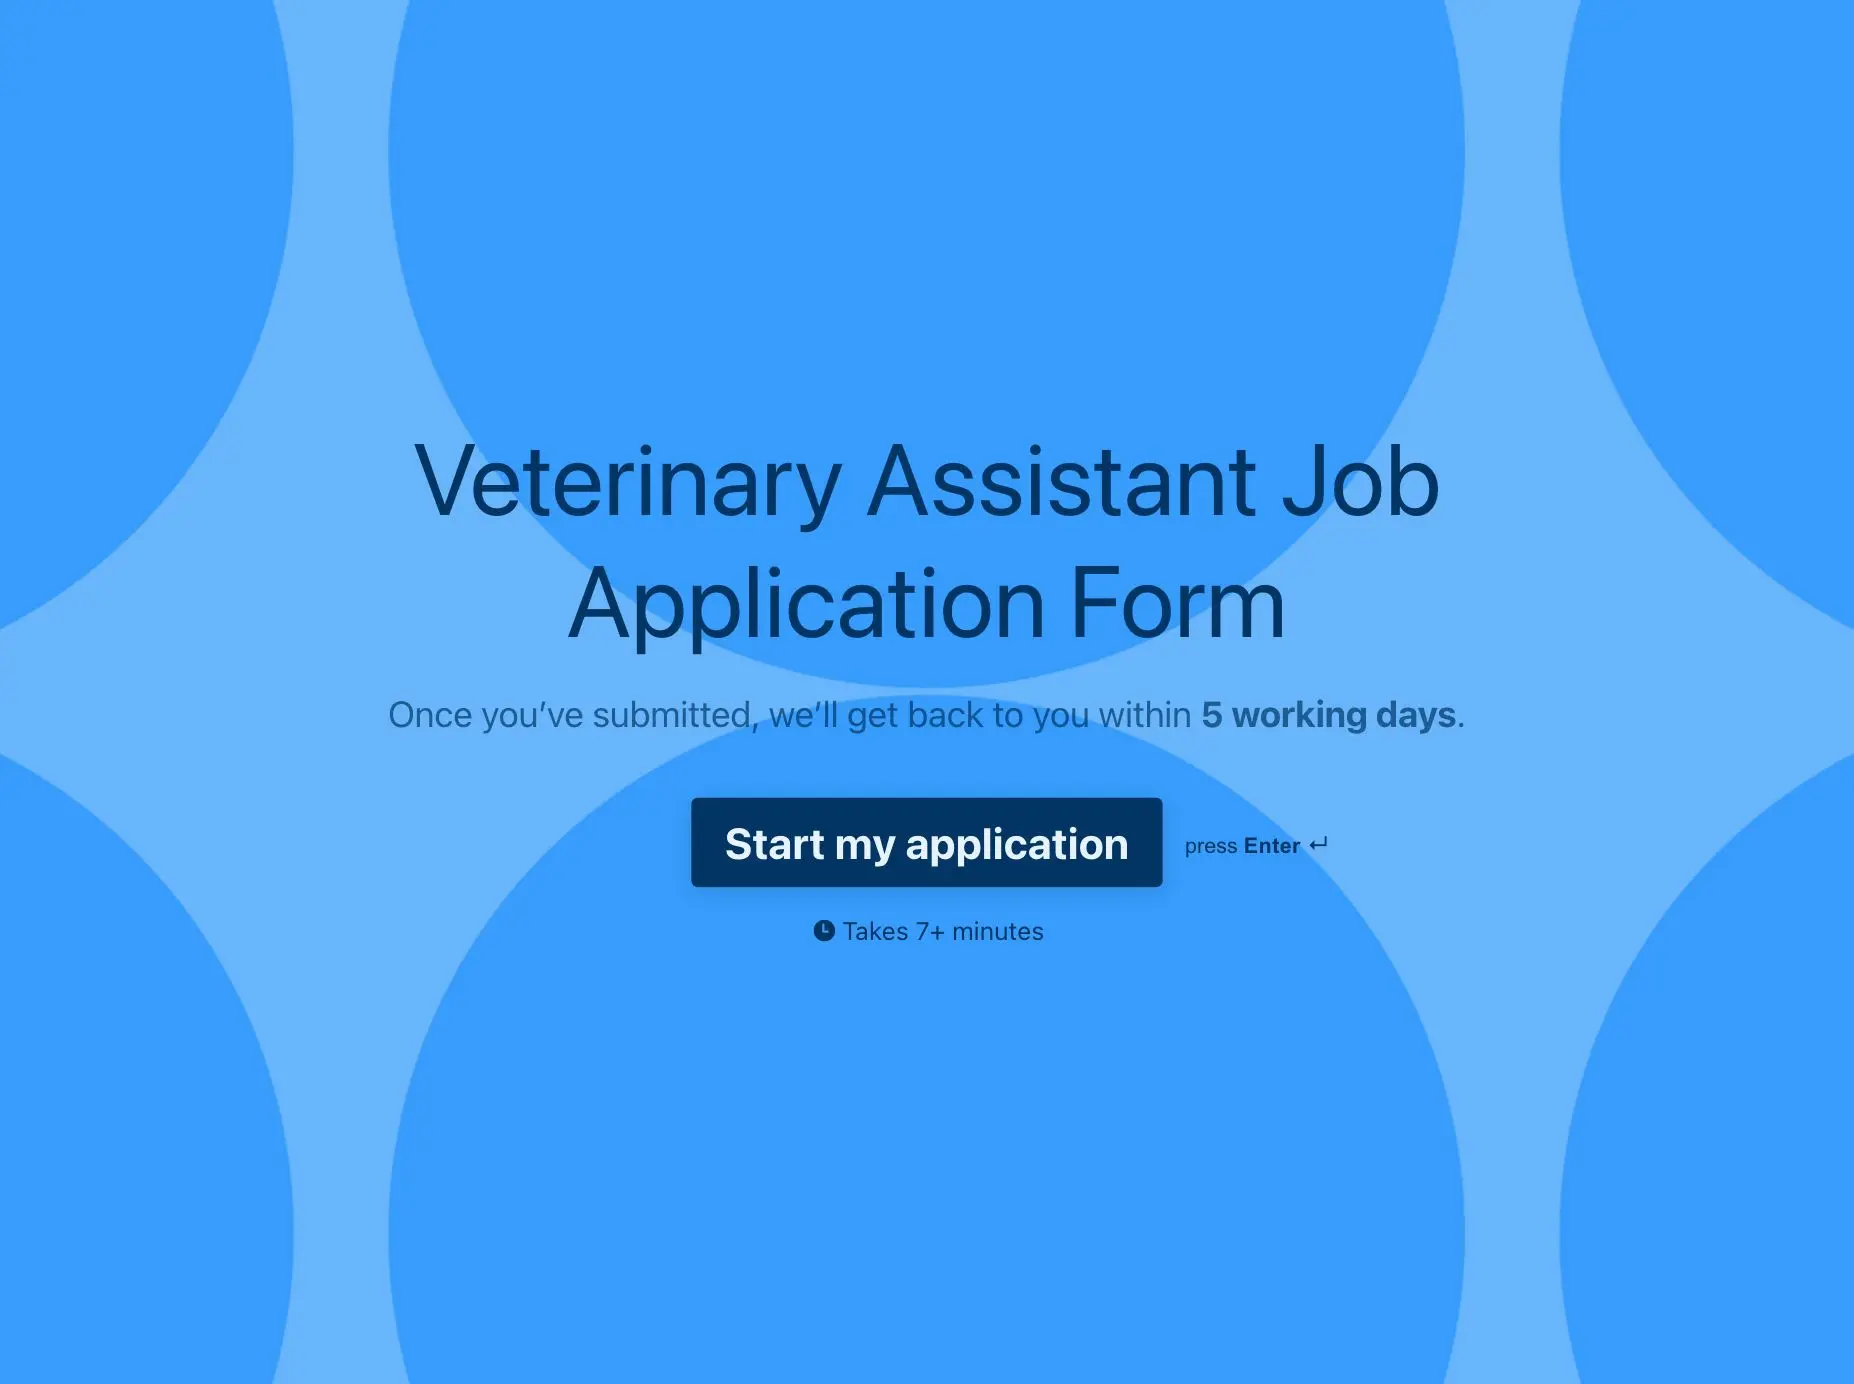 Veterinary Assistant Job Application Form Template Hero